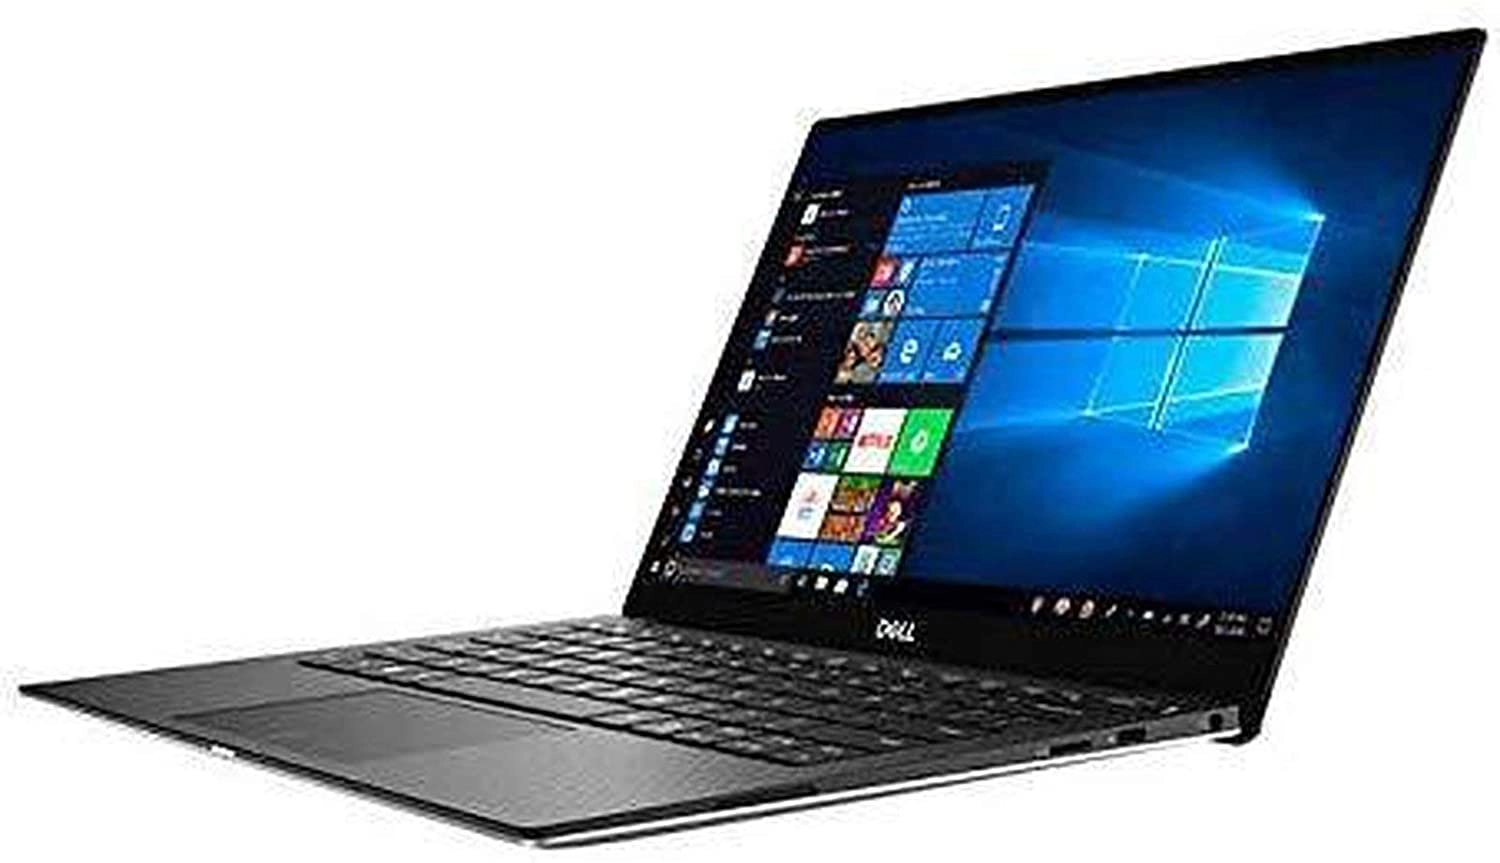 Dell XPS13 7390 laptop image